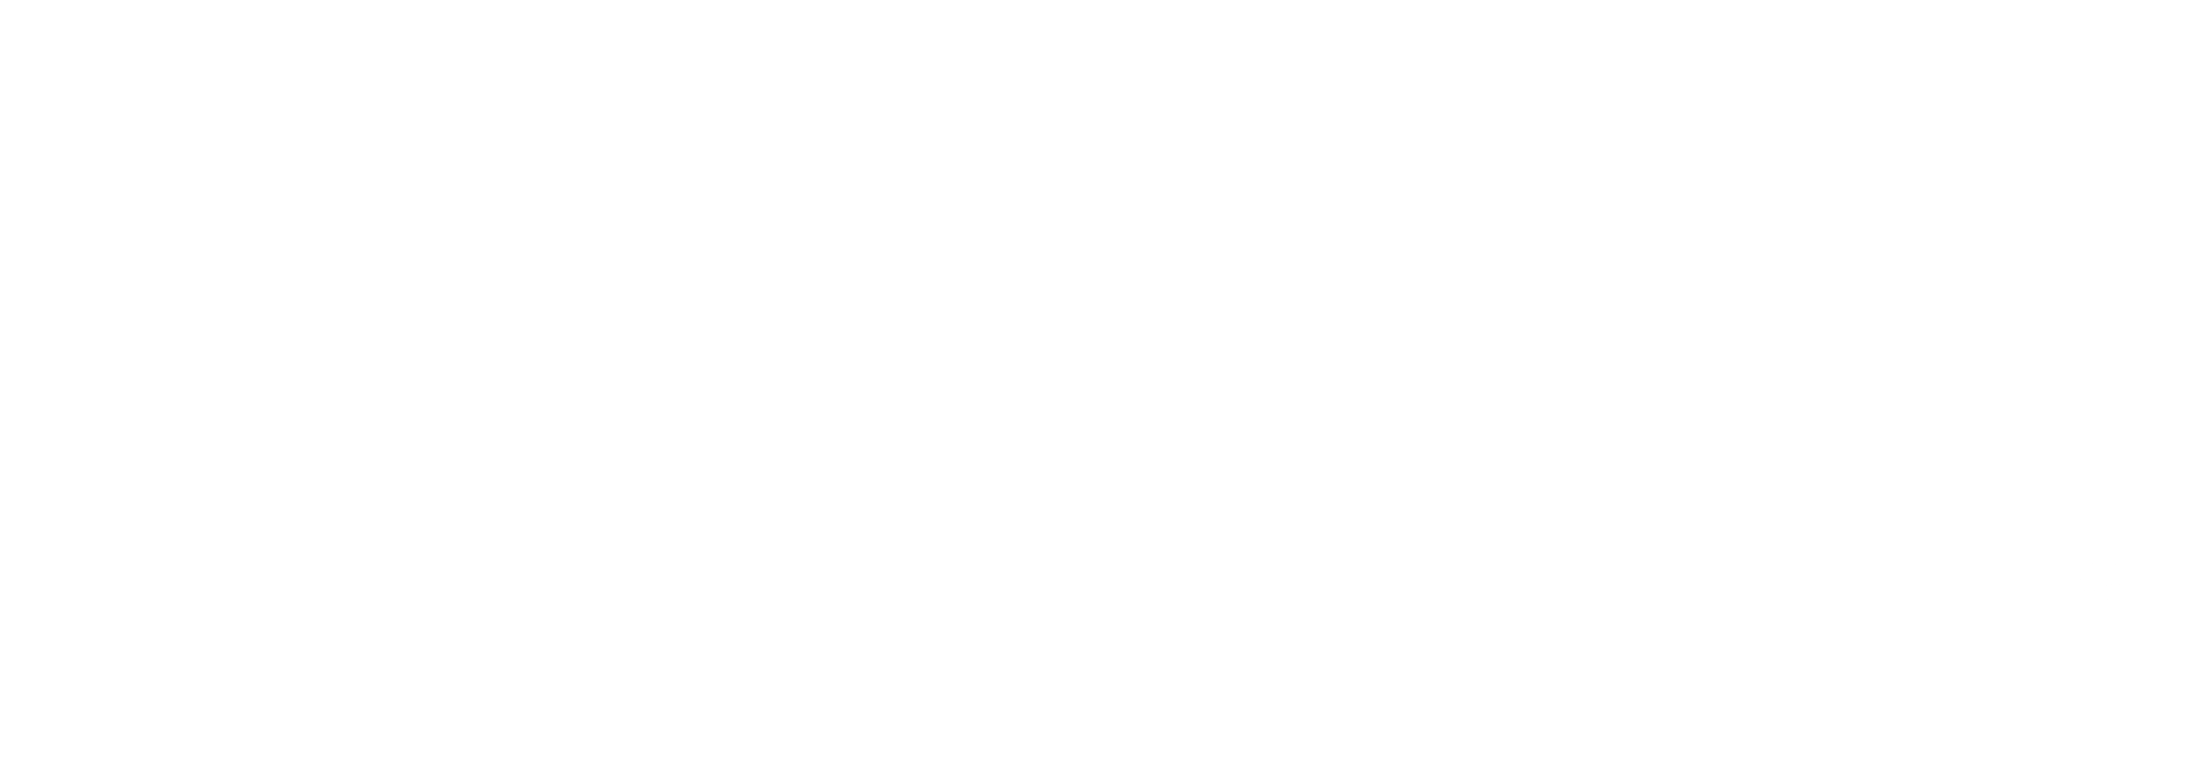 Kool Aid Logo Black And White - Fortnite Logo Transparent White (2400x2400), Png Download